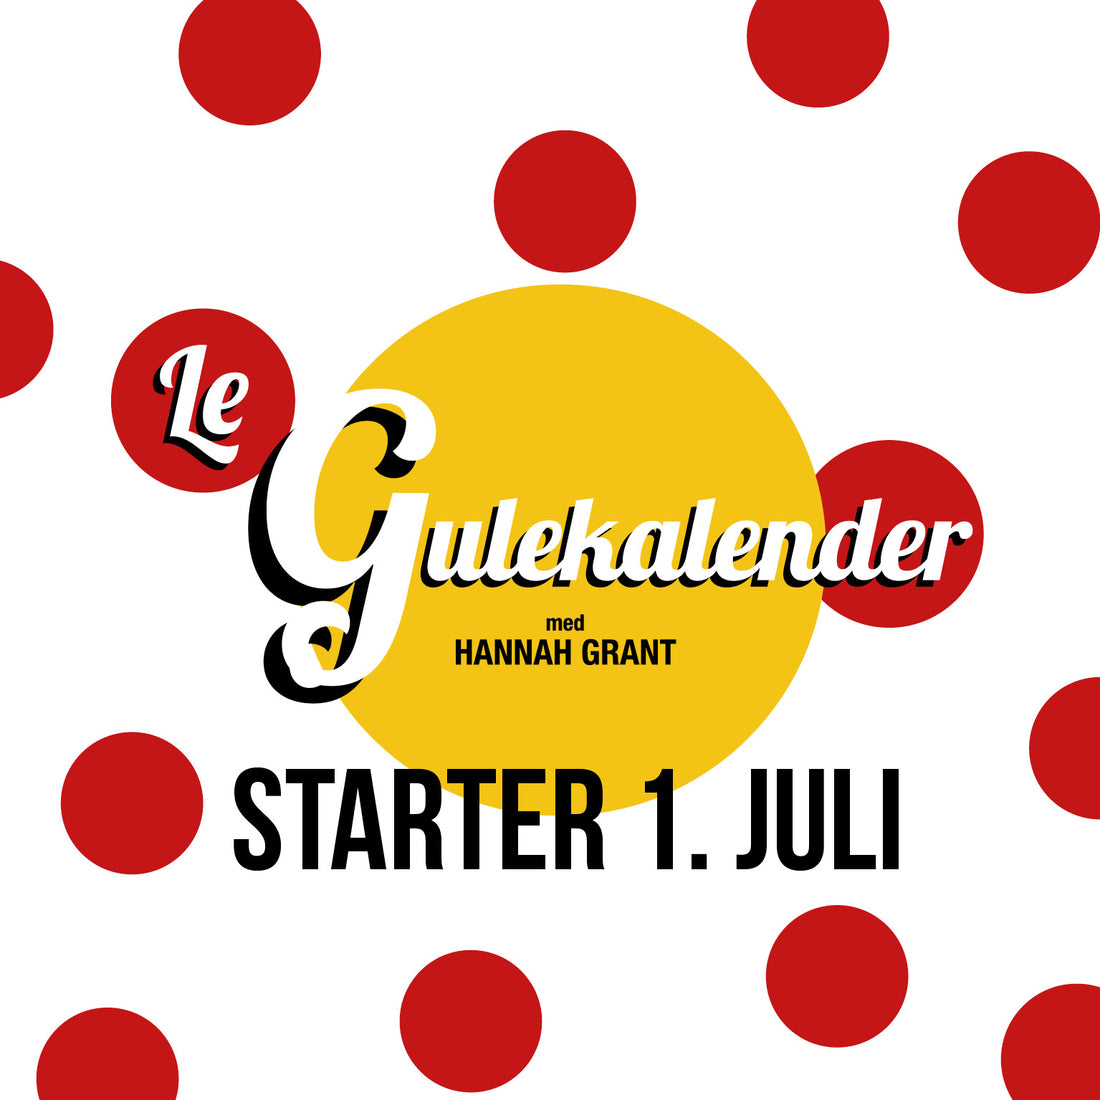 Le Gulekalender starter 1. juli